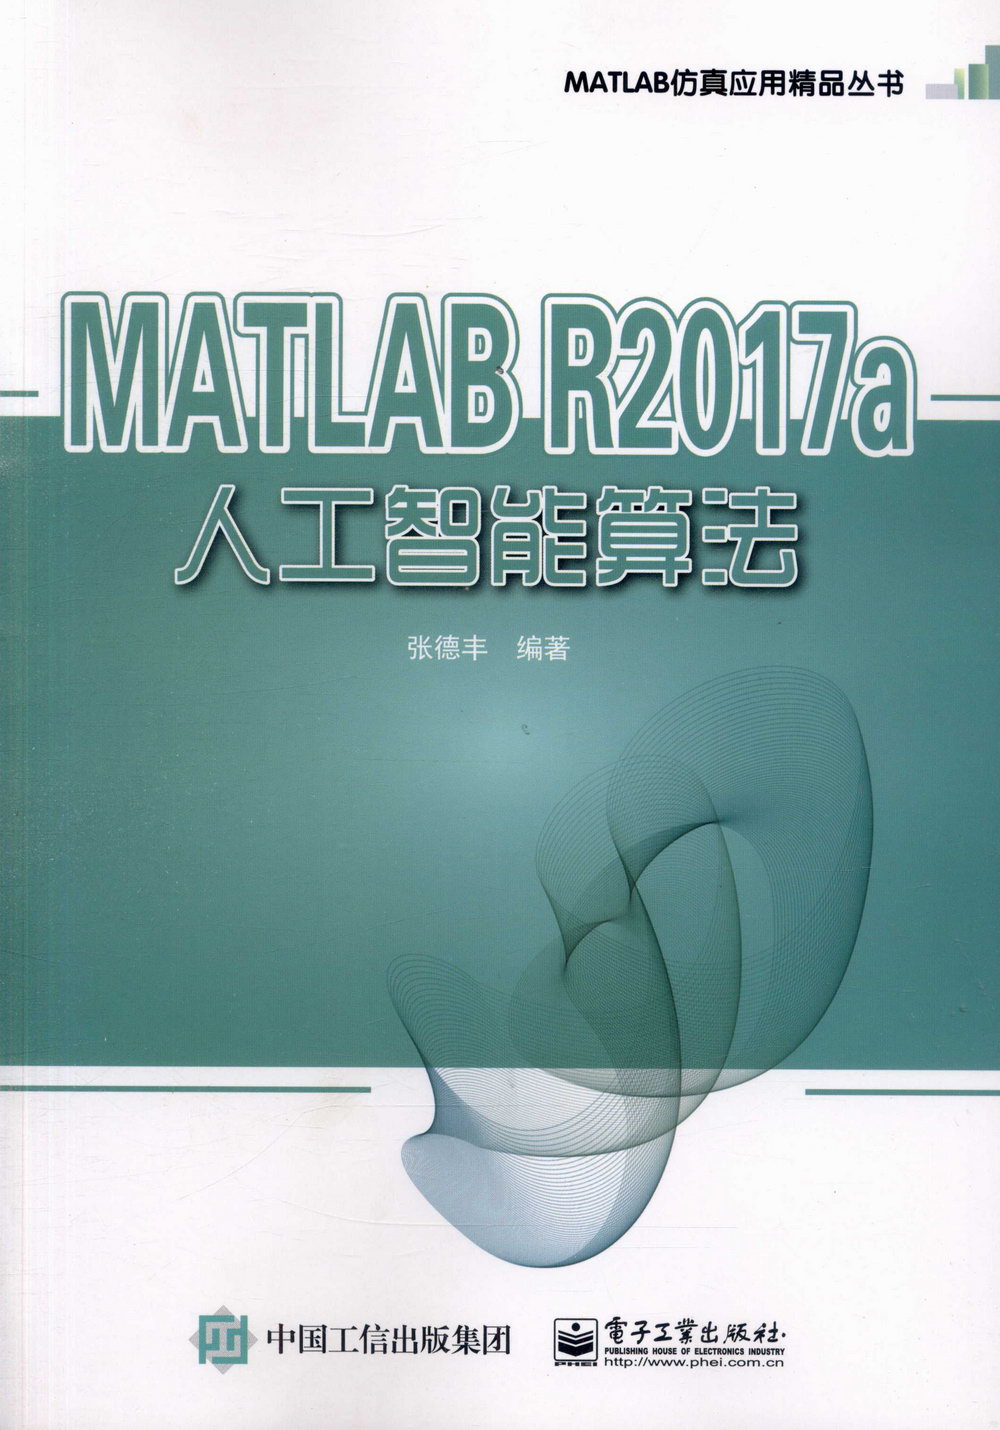 MATLAB R2017a人工智慧演算法